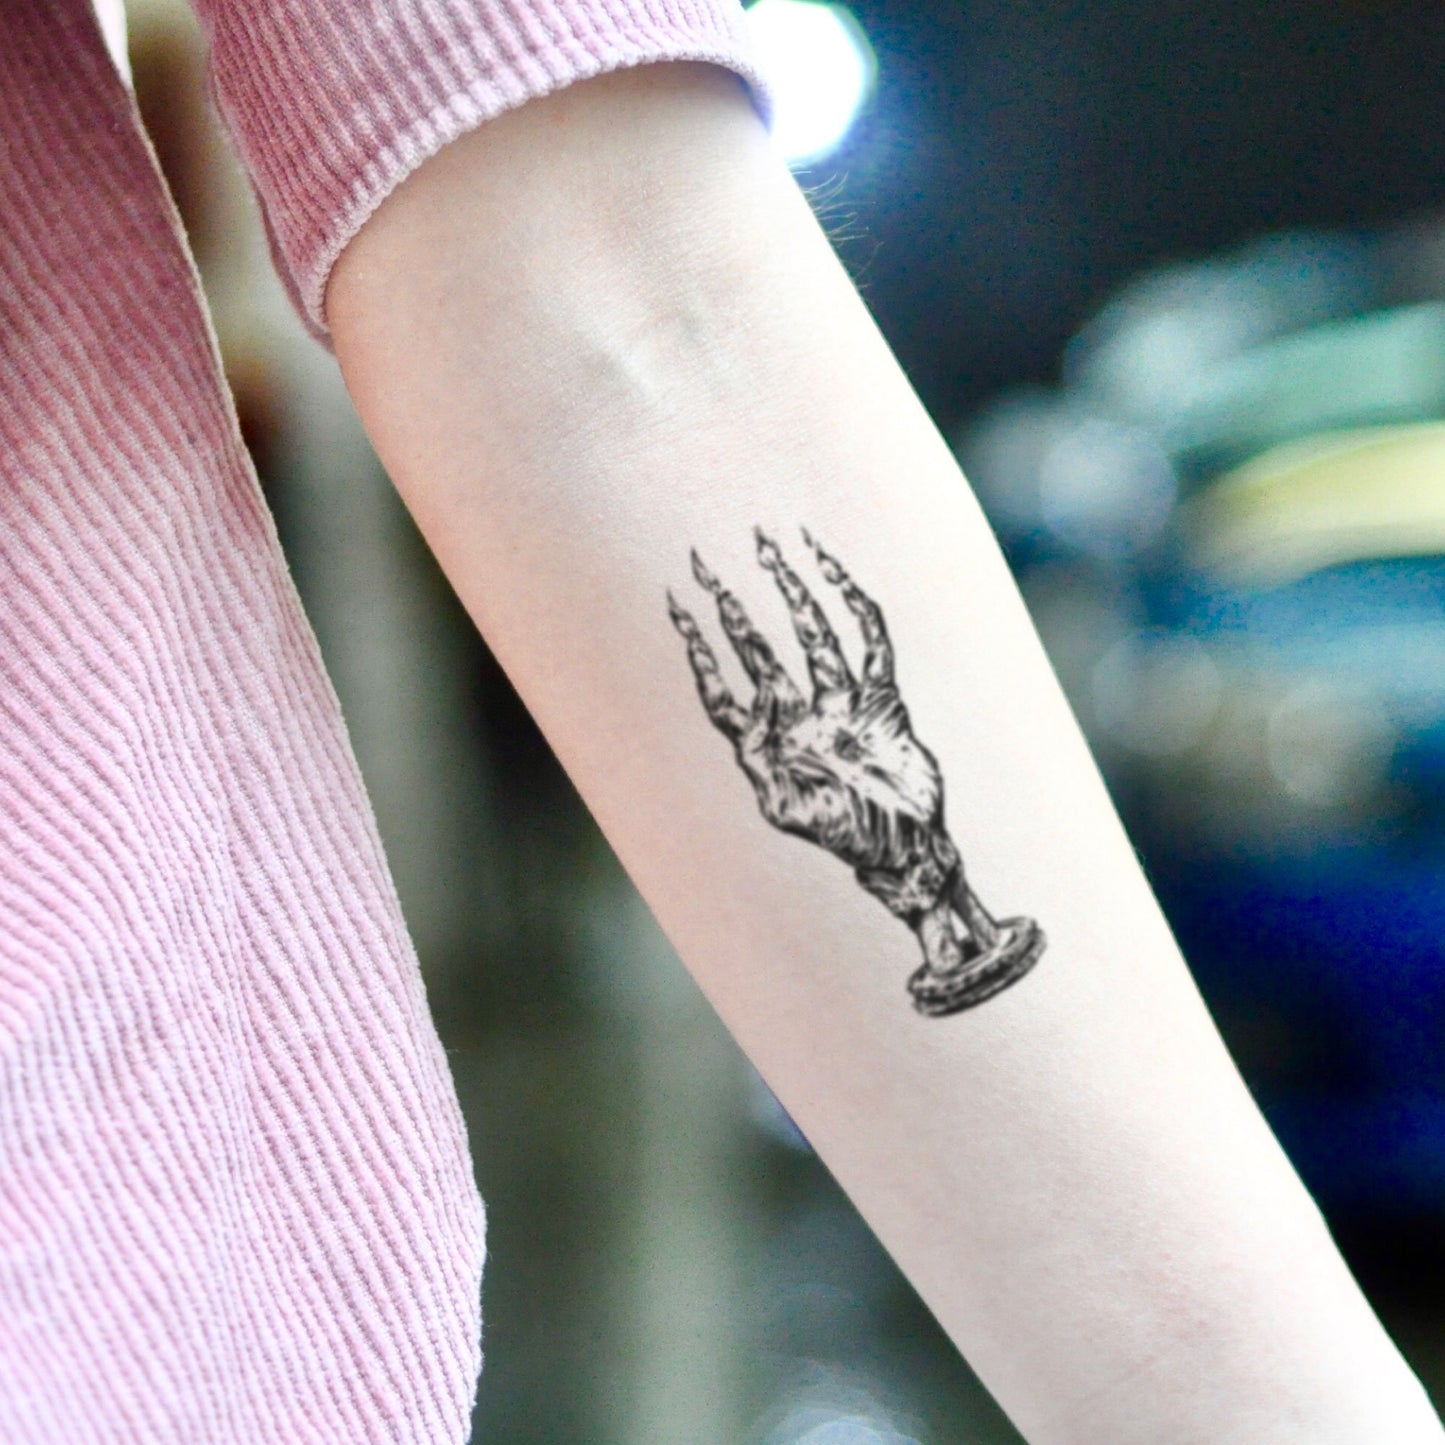 fake small hand of glory illustrative temporary tattoo sticker design idea on inner arm